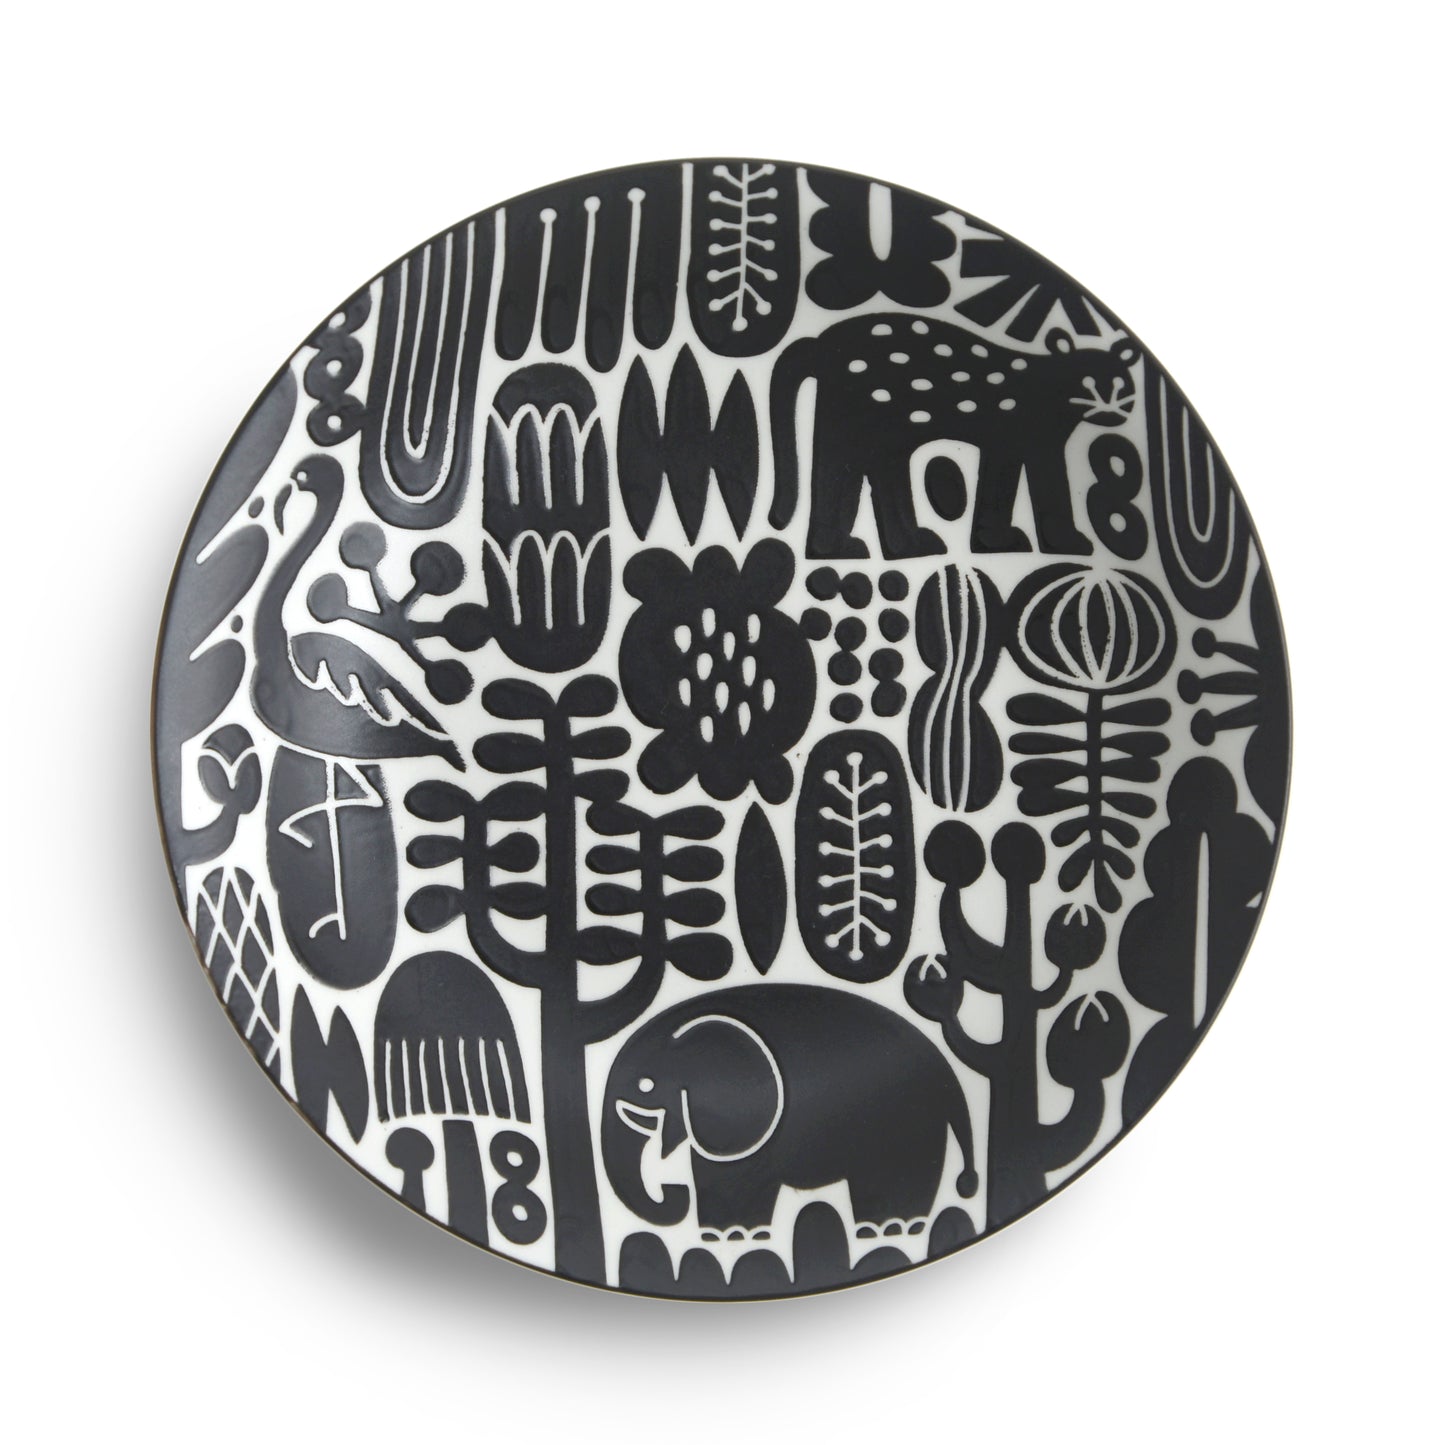 [natural69] [Utopia] [Dish] Hasami Yaki Round Plate, Dish, Sweet Dish, Plate, Animal Pattern, Stylish, Adult, Colorful, Cute, Natural 69